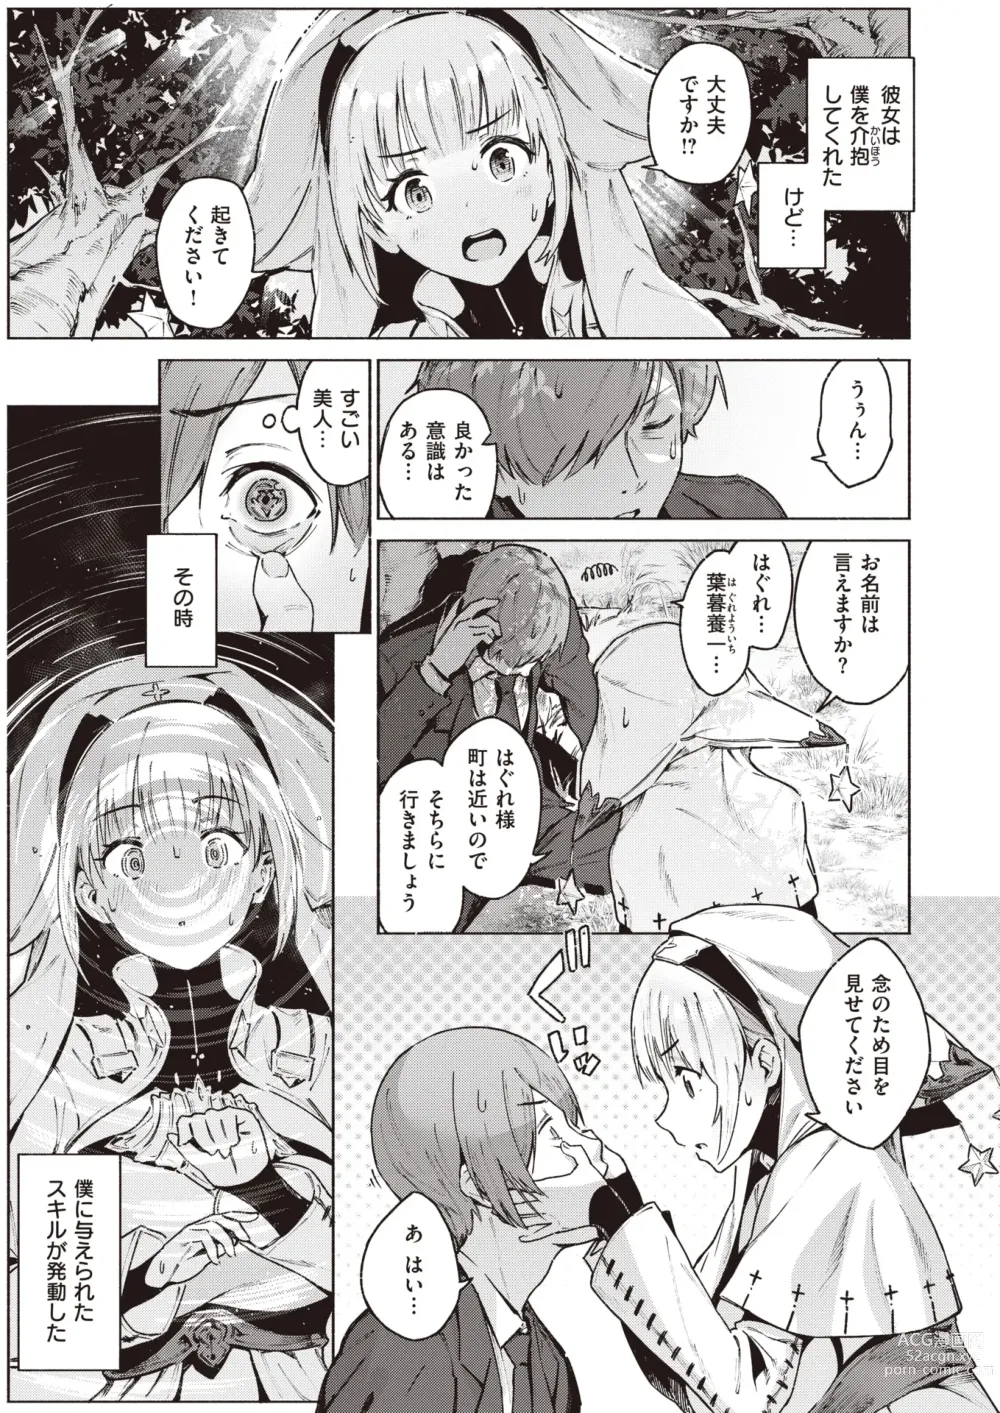 Page 6 of manga Isekai Rakuten Vol. 23